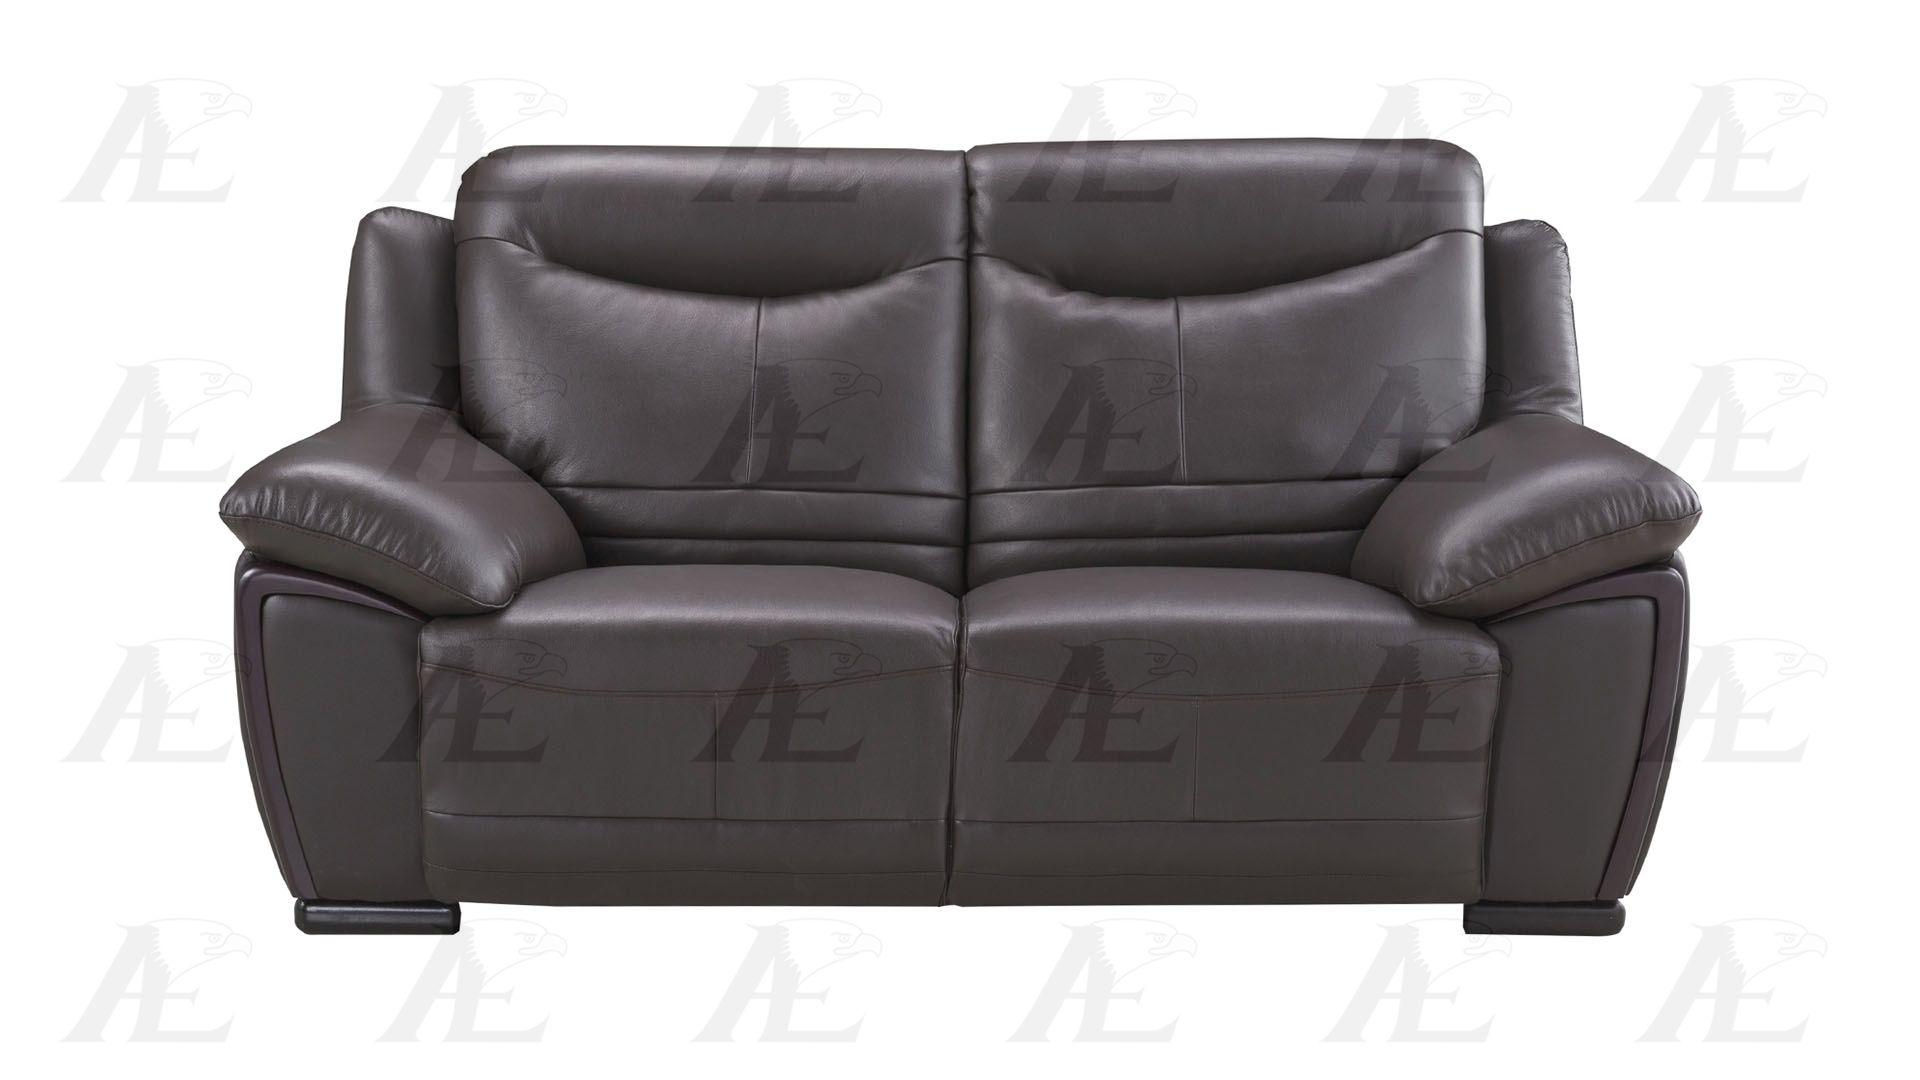 

                    
American Eagle Furniture EK-B308-DC Sofa Loveseat and Chair Set Dark Chocolate Genuine Leather Purchase 
